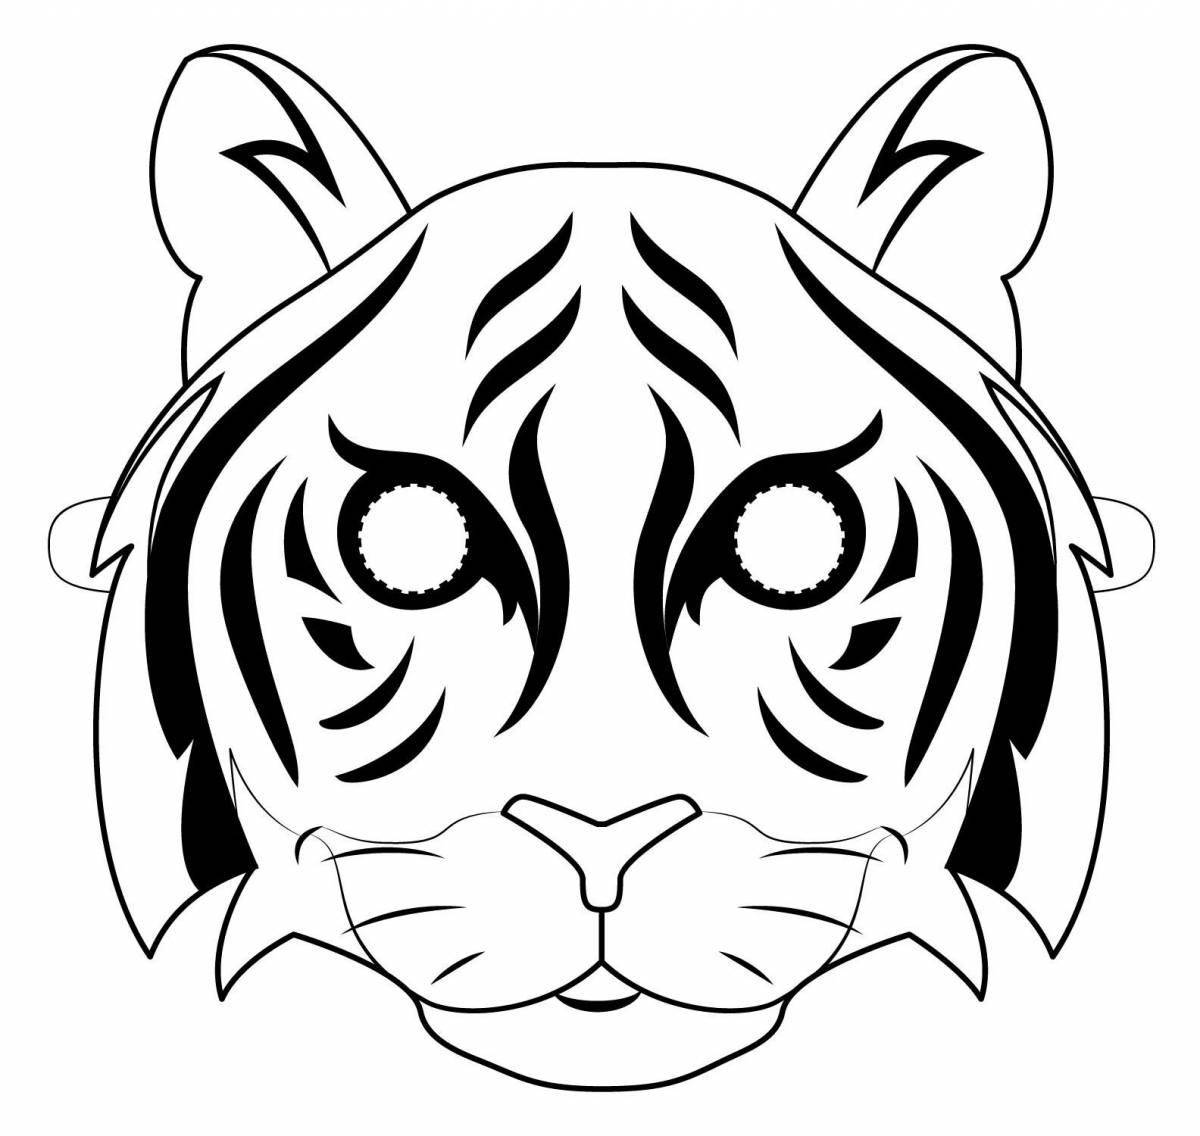 Amazing tiger head coloring book